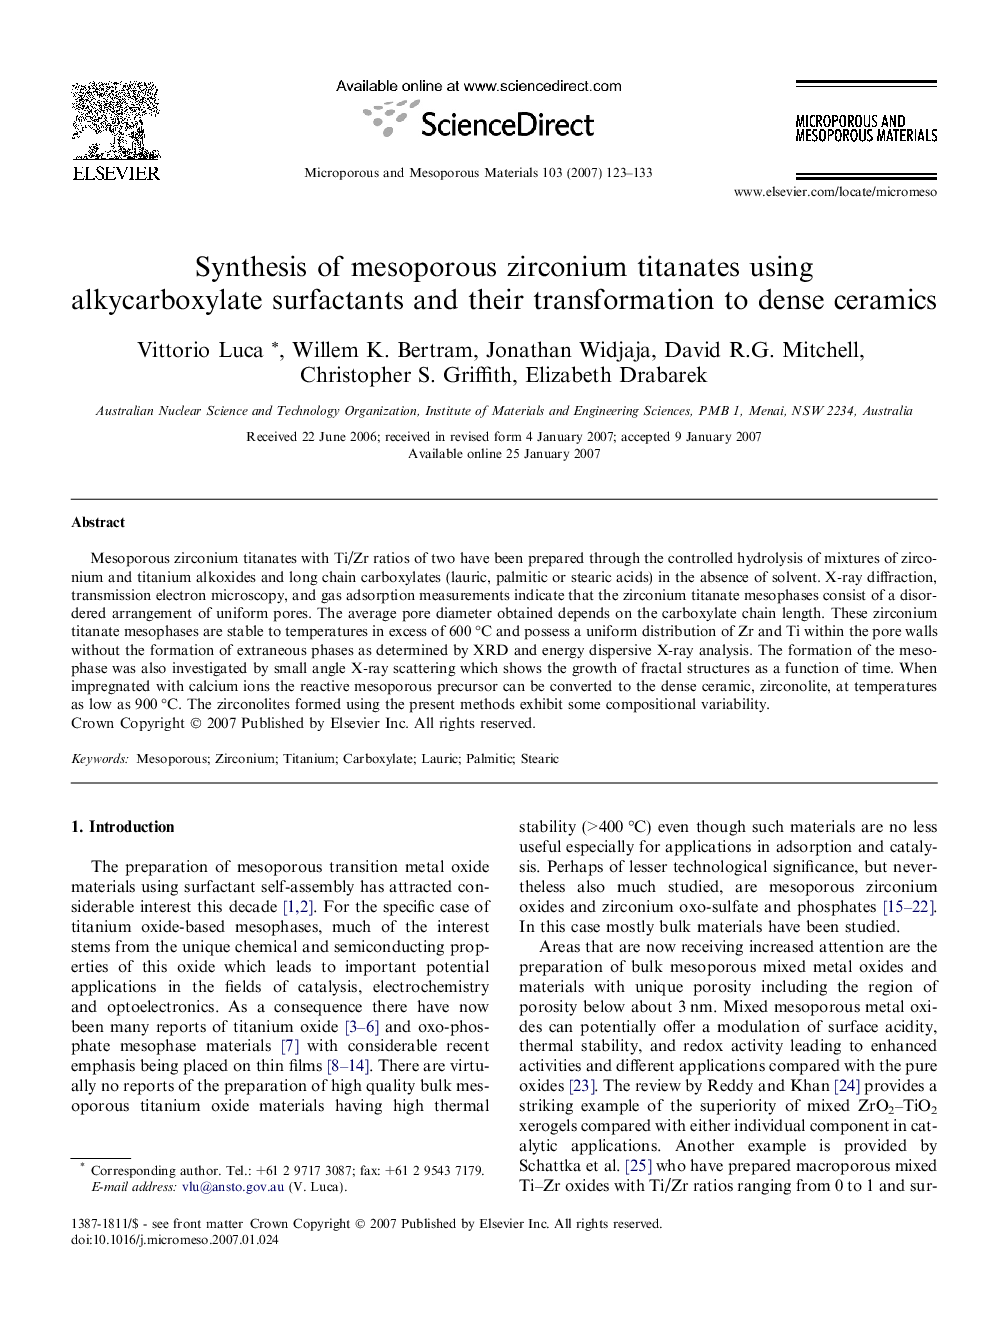 Synthesis of mesoporous zirconium titanates using alkycarboxylate surfactants and their transformation to dense ceramics